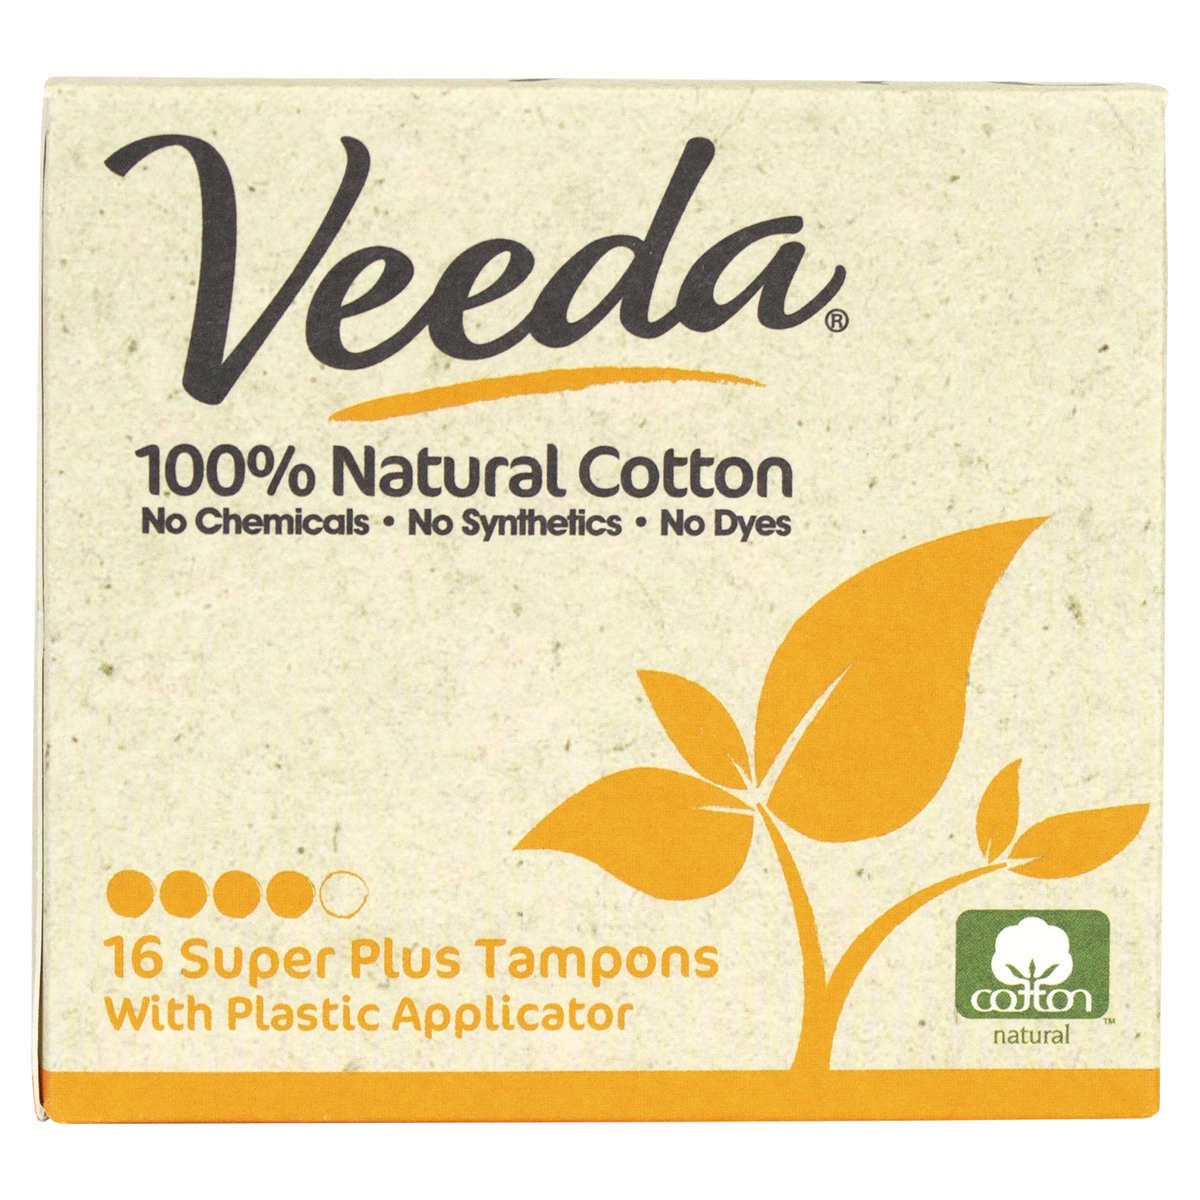 Veeda Natural All-Cotton Tampons, Super Plus, Compact Applicator